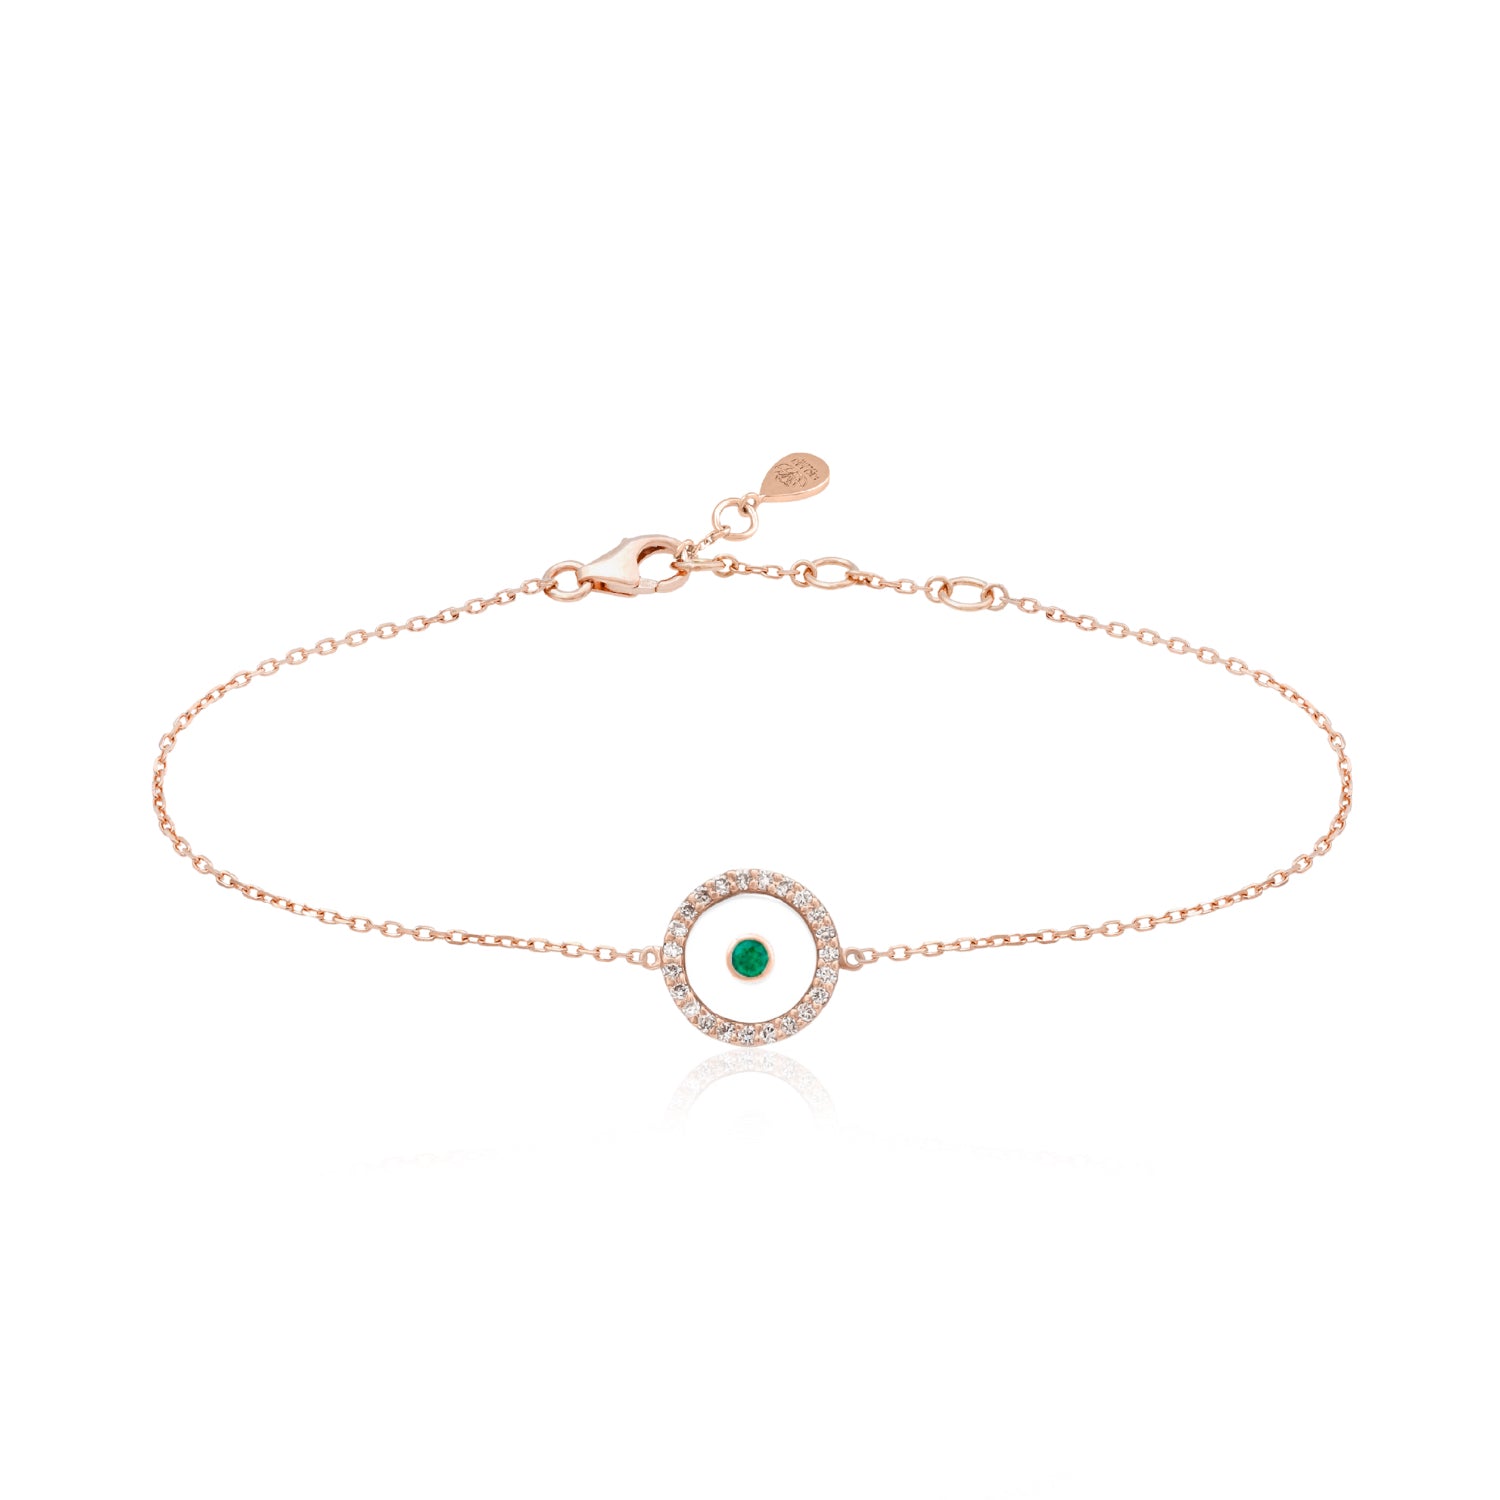 Emerald May Birthstone Bracelet in Rose Gold